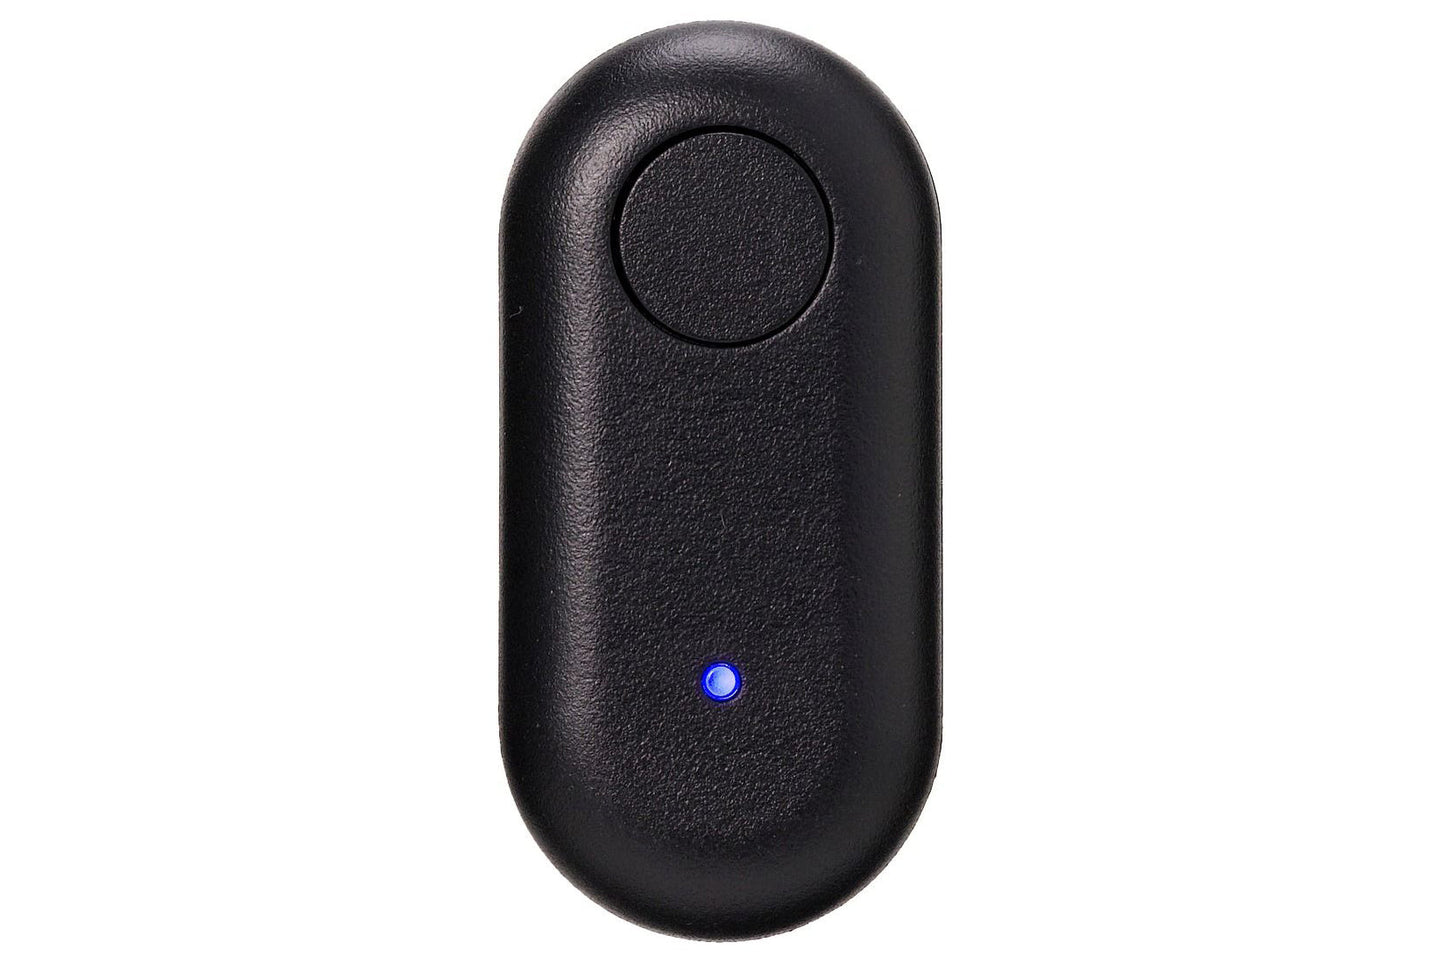 Ricoh TR-1 Bluetooth Remote Control for Theta Series - maplin.co.uk